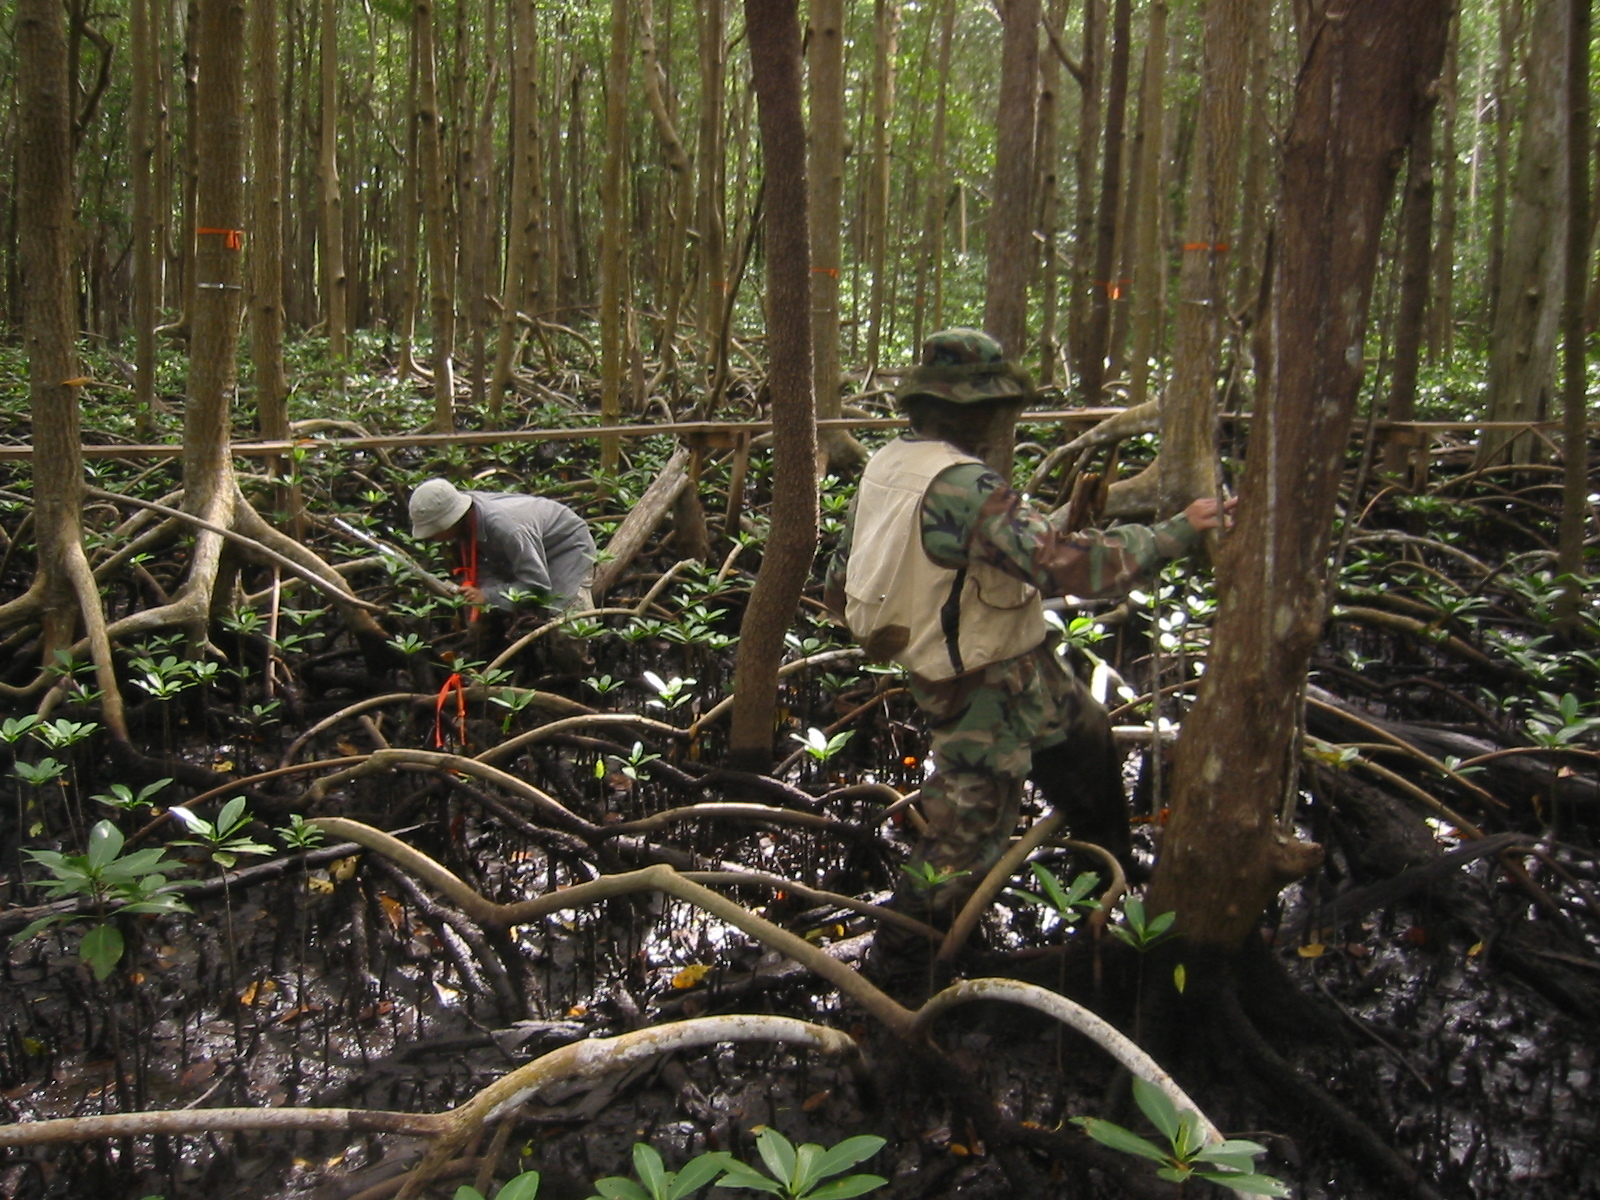 Sharon Ewe and Edward Castaneda measuring mangrove seedlings along transects at SRS-6 in Shark River